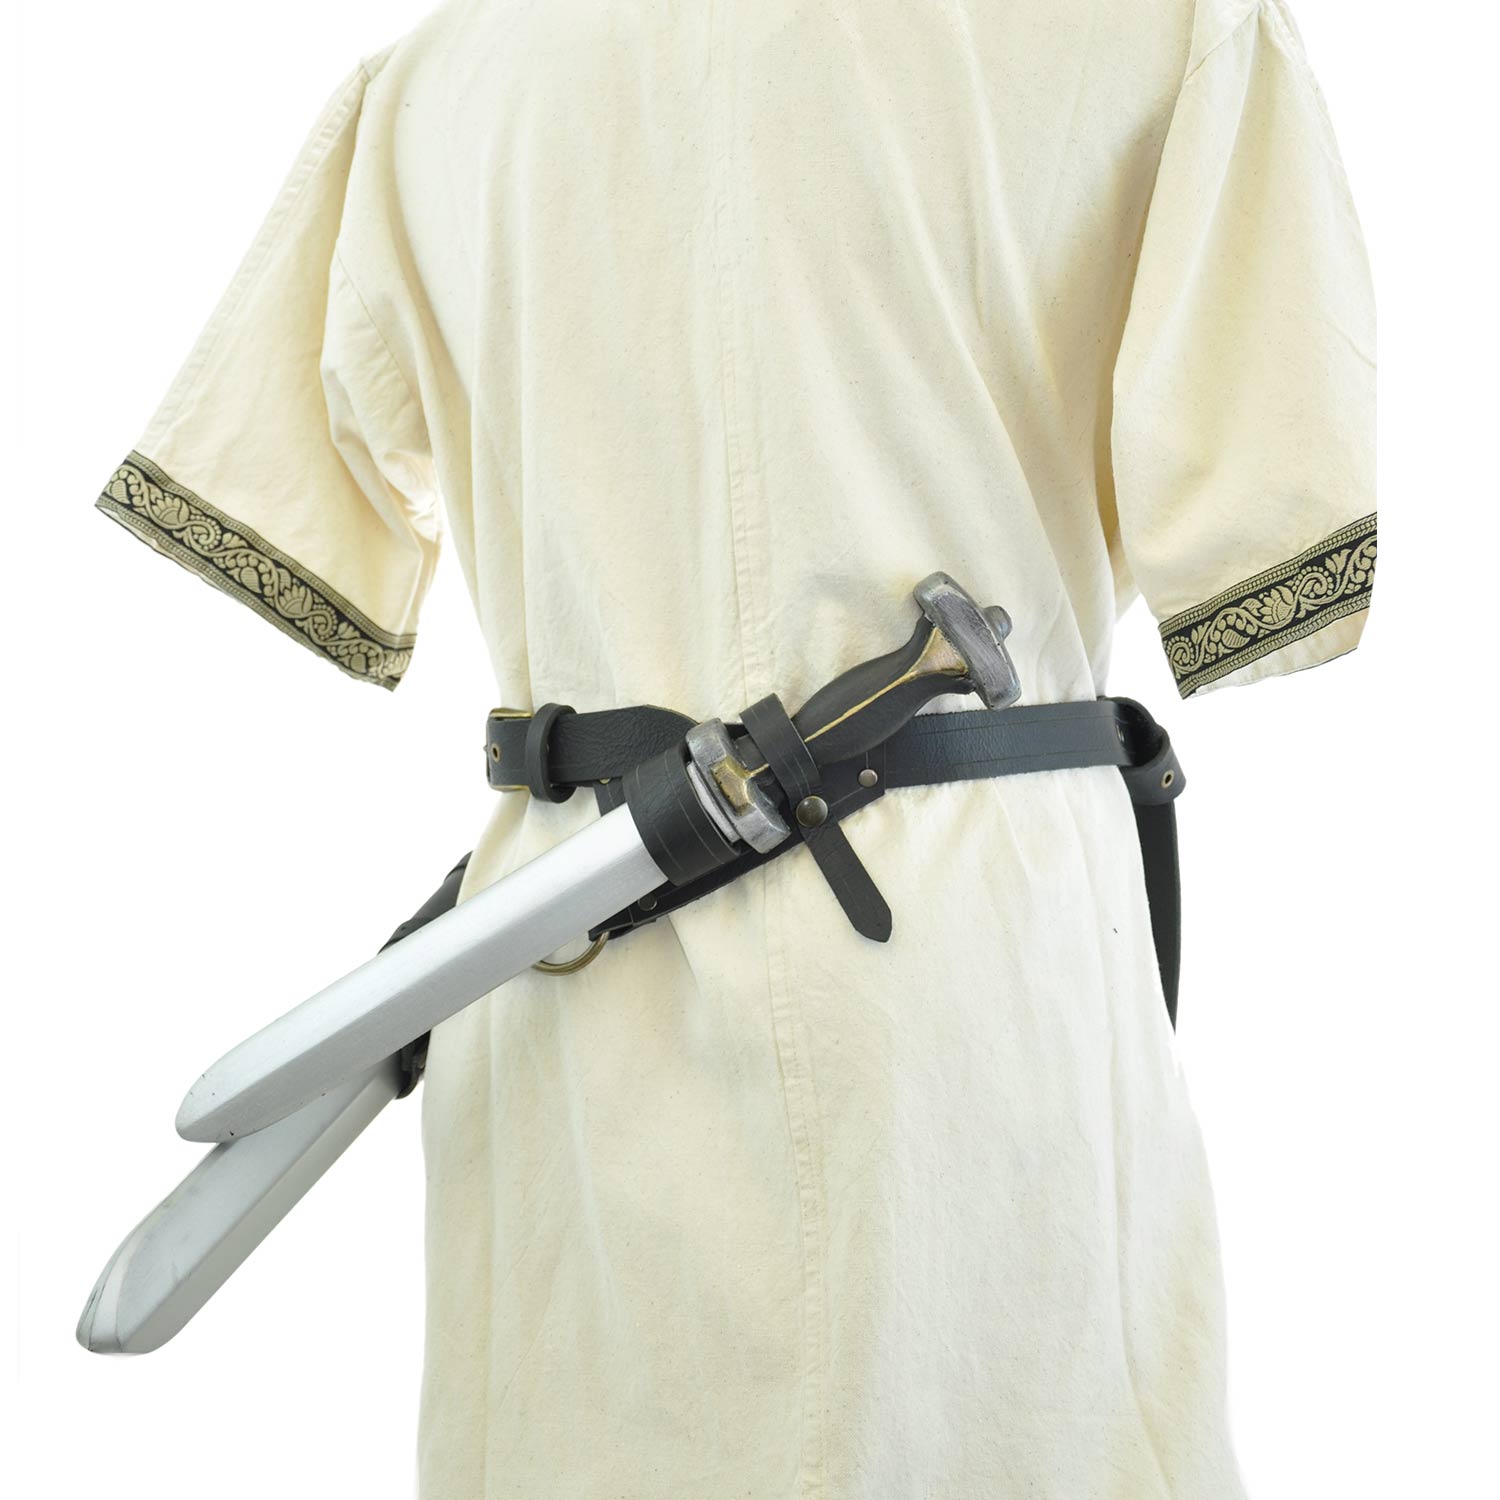 Two-part sword belt, black 